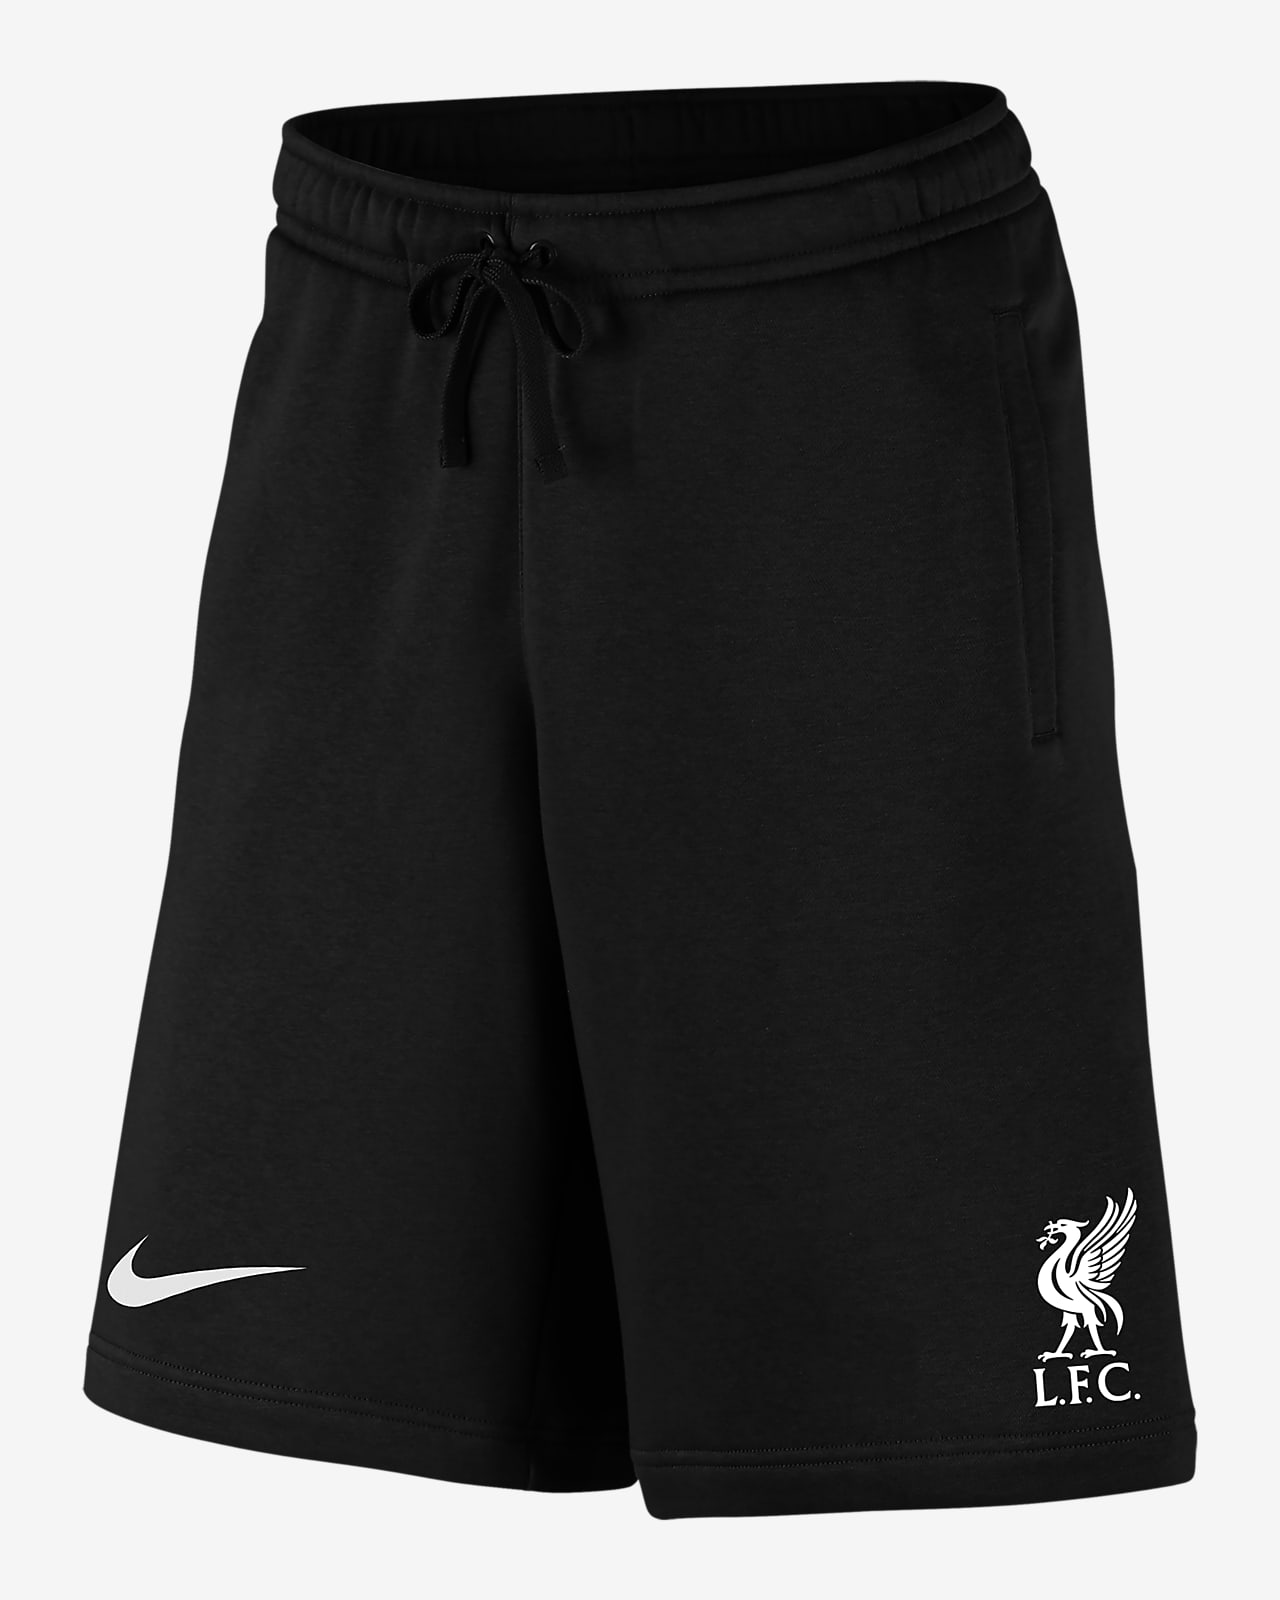 Liverpool Club Fleece Men's Shorts